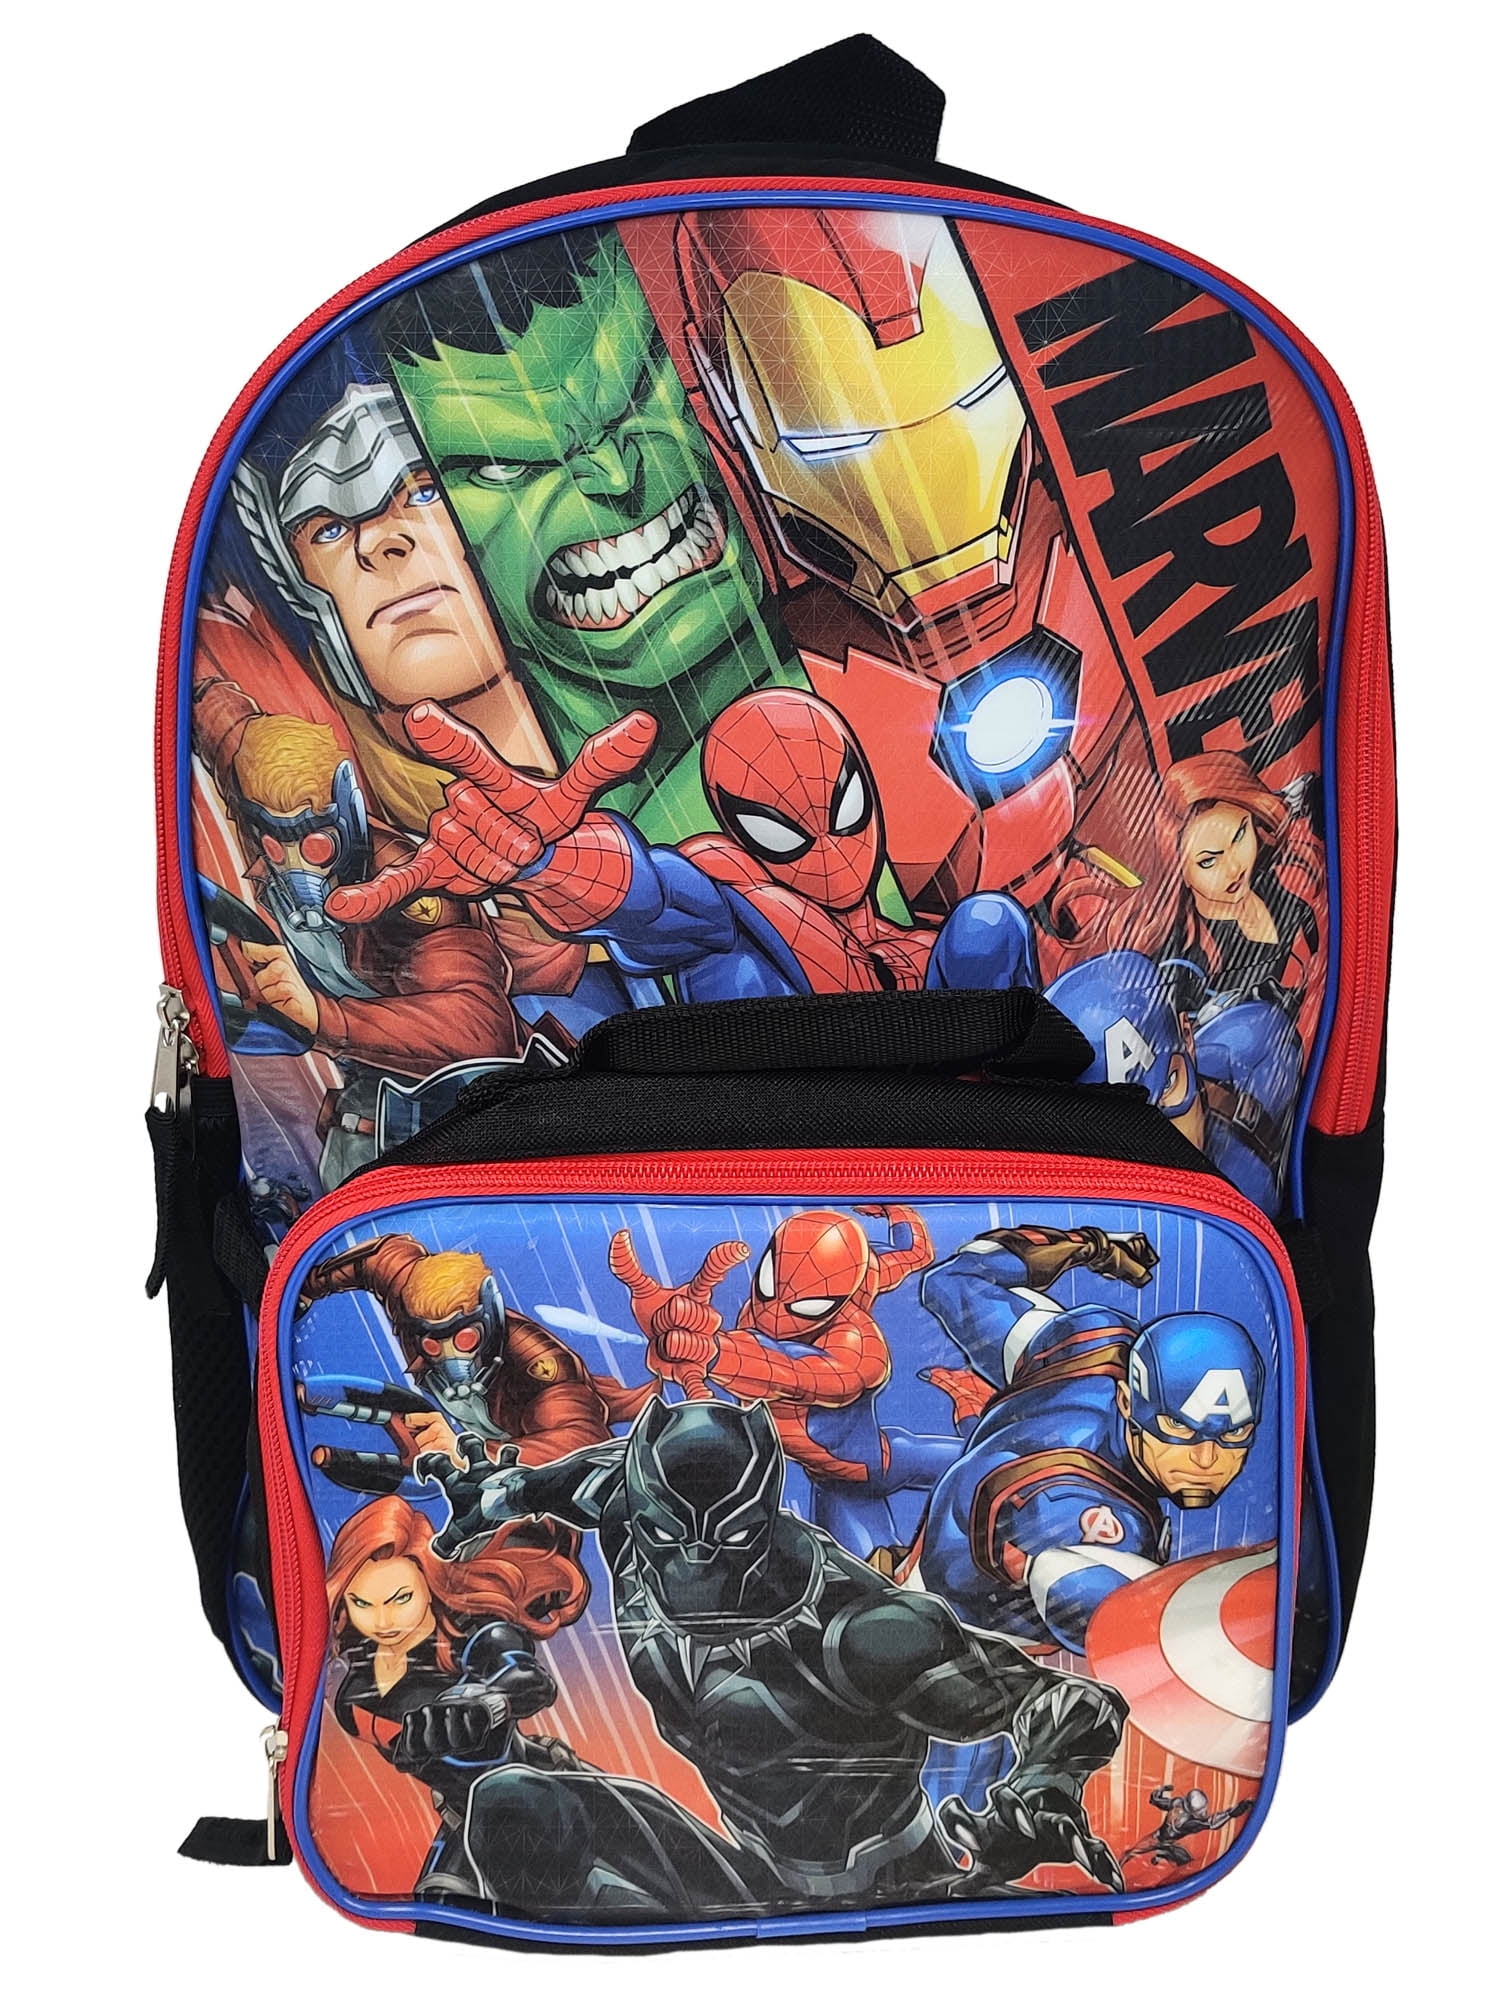 Cute Deadpool Backpack School Insulated Lunch Bag Pen Case Shoulder Bags Lot set 